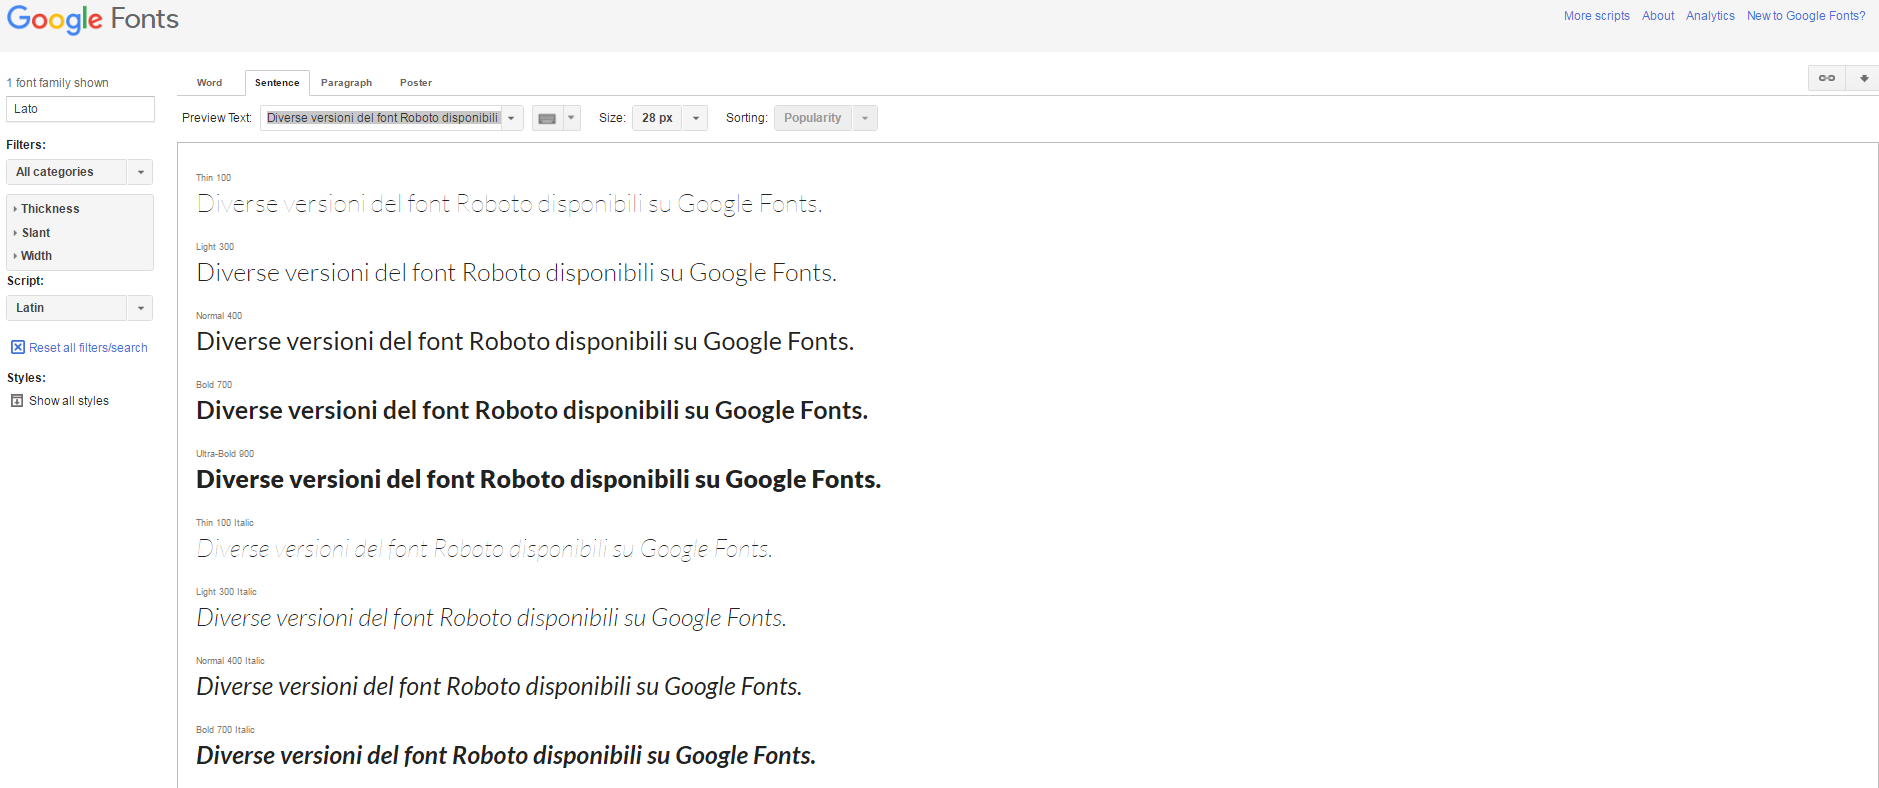 Diverse versioni del font Roboto disponibili su Google Fonts